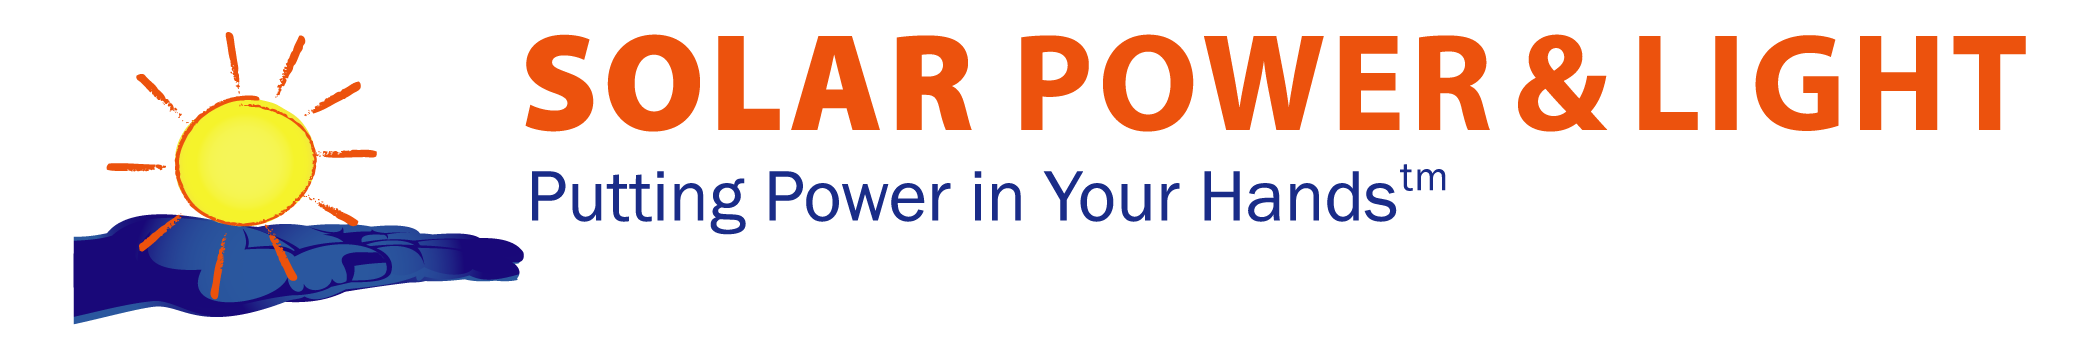 Solar Power & Light logo